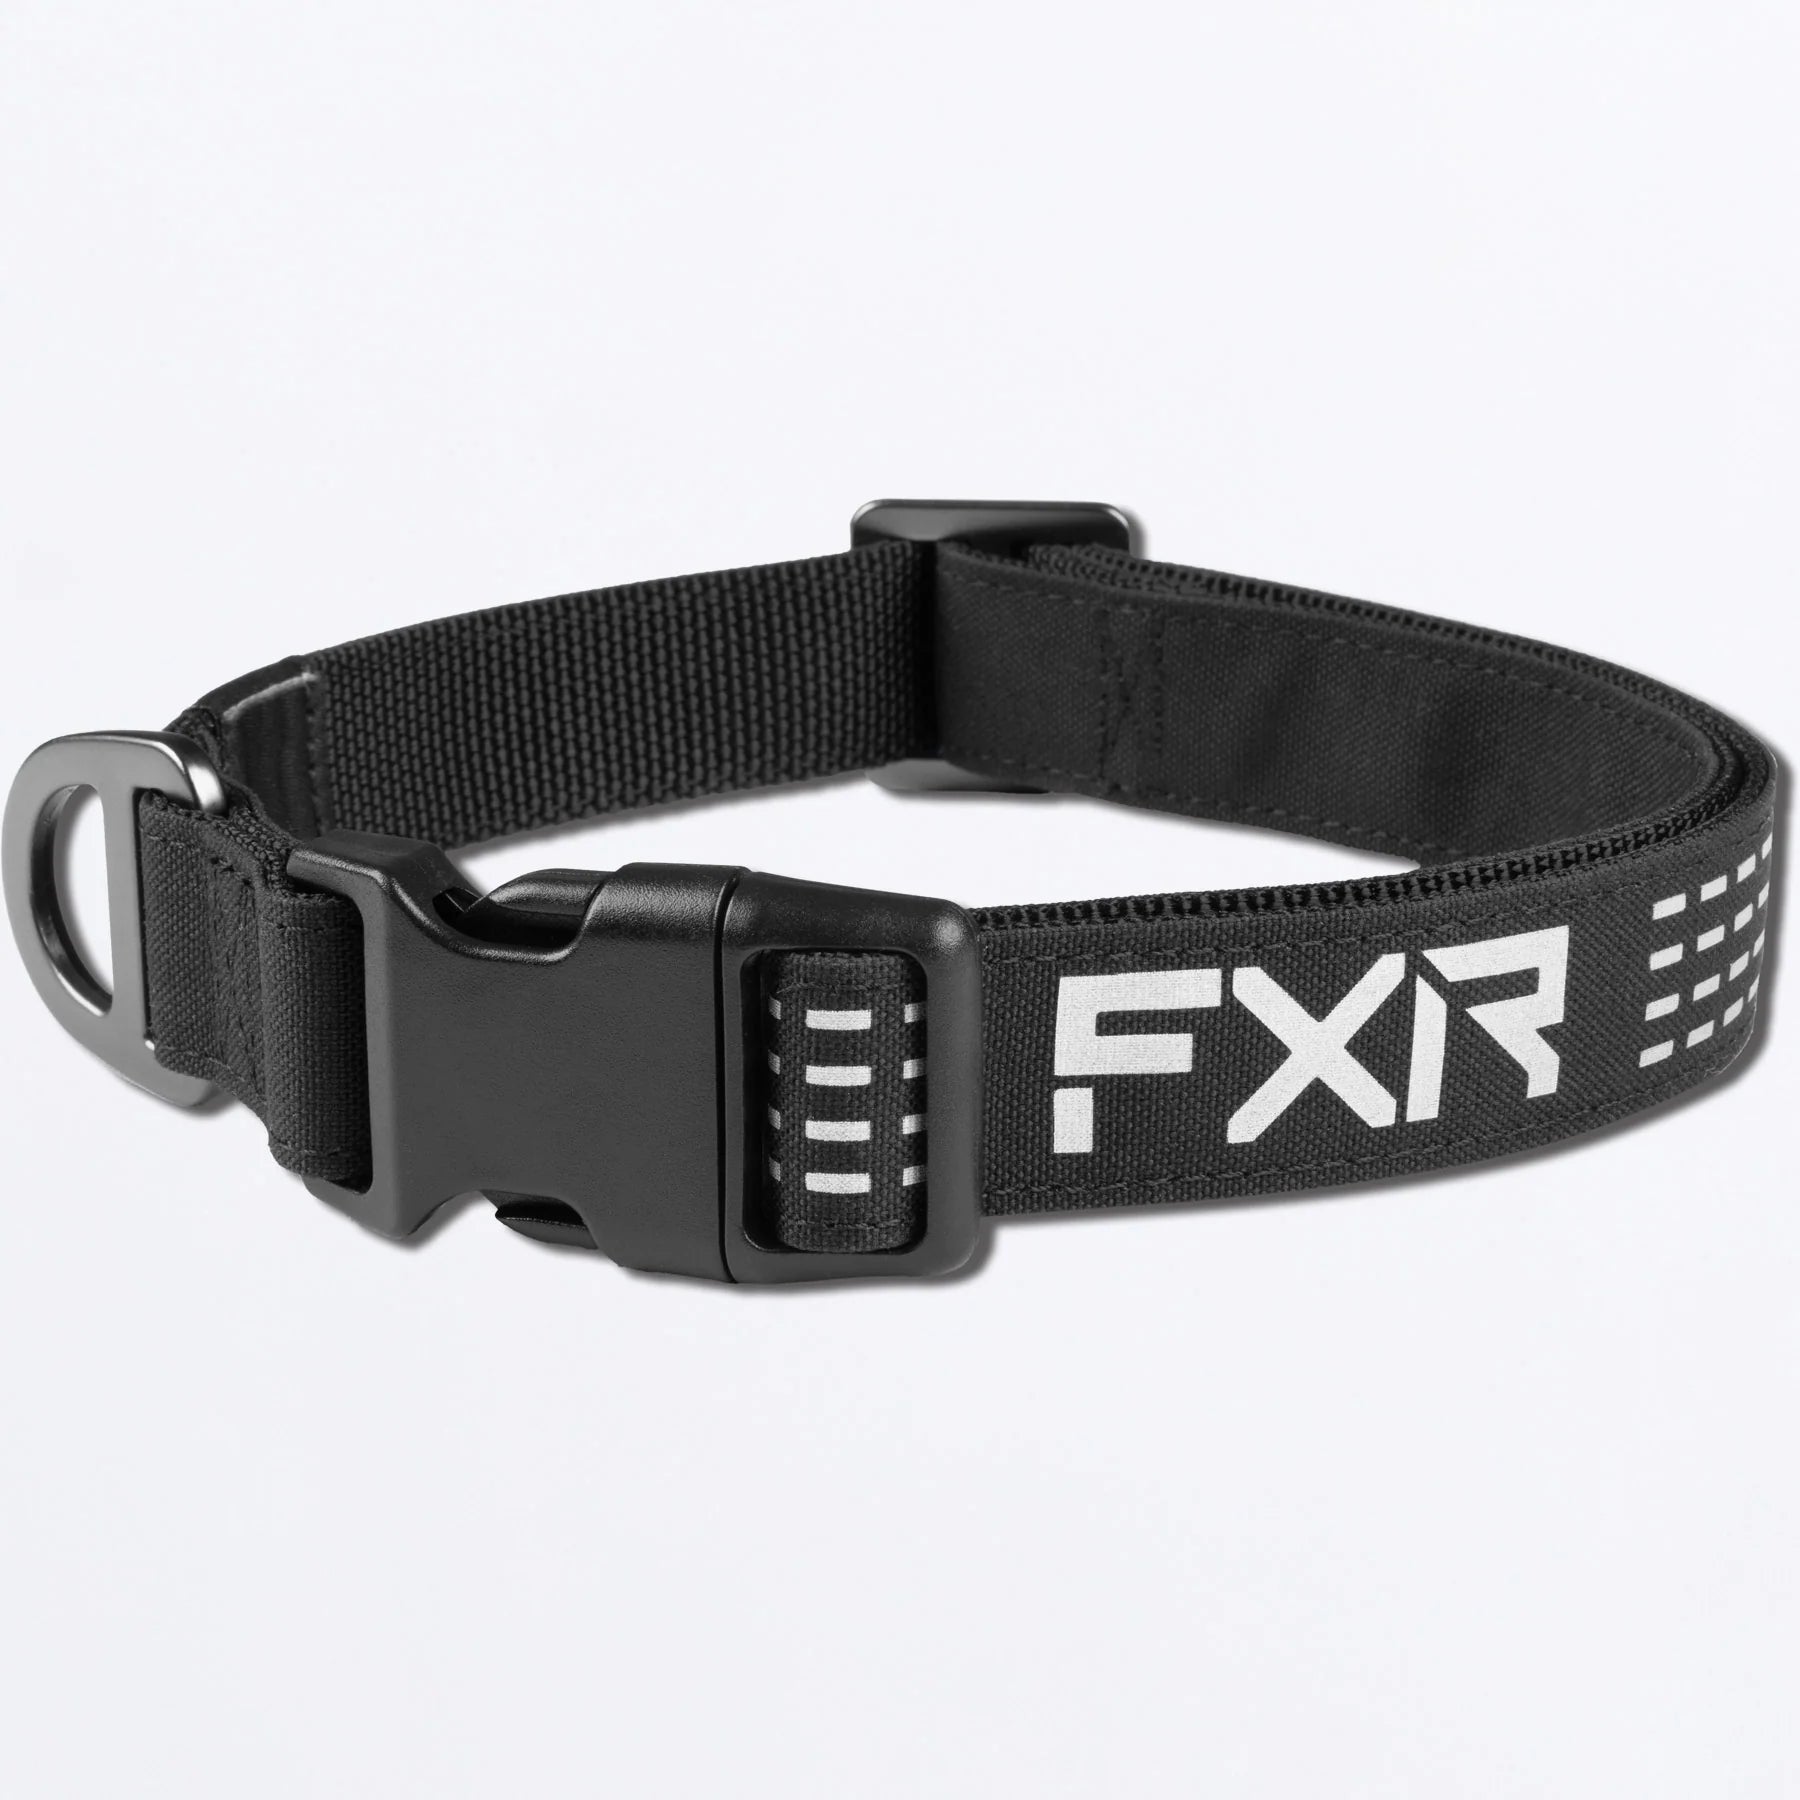 FXR Dog Collar and Lead Combo Black/Grey